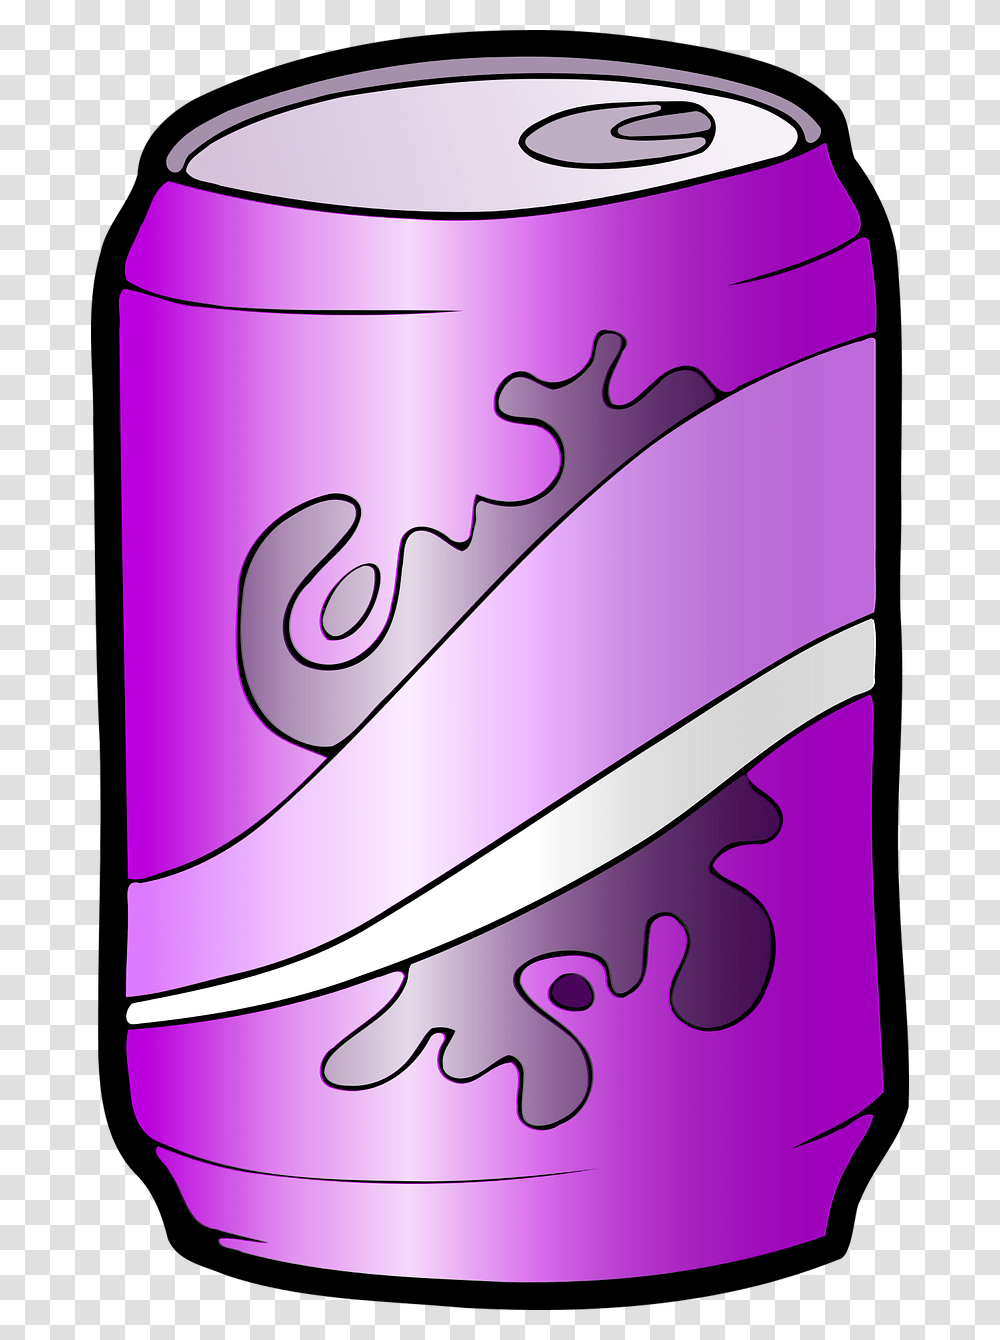 Cola Drink Junk Food Pop Refreshment Soda Purple Soda Can, Bottle, Label Transparent Png